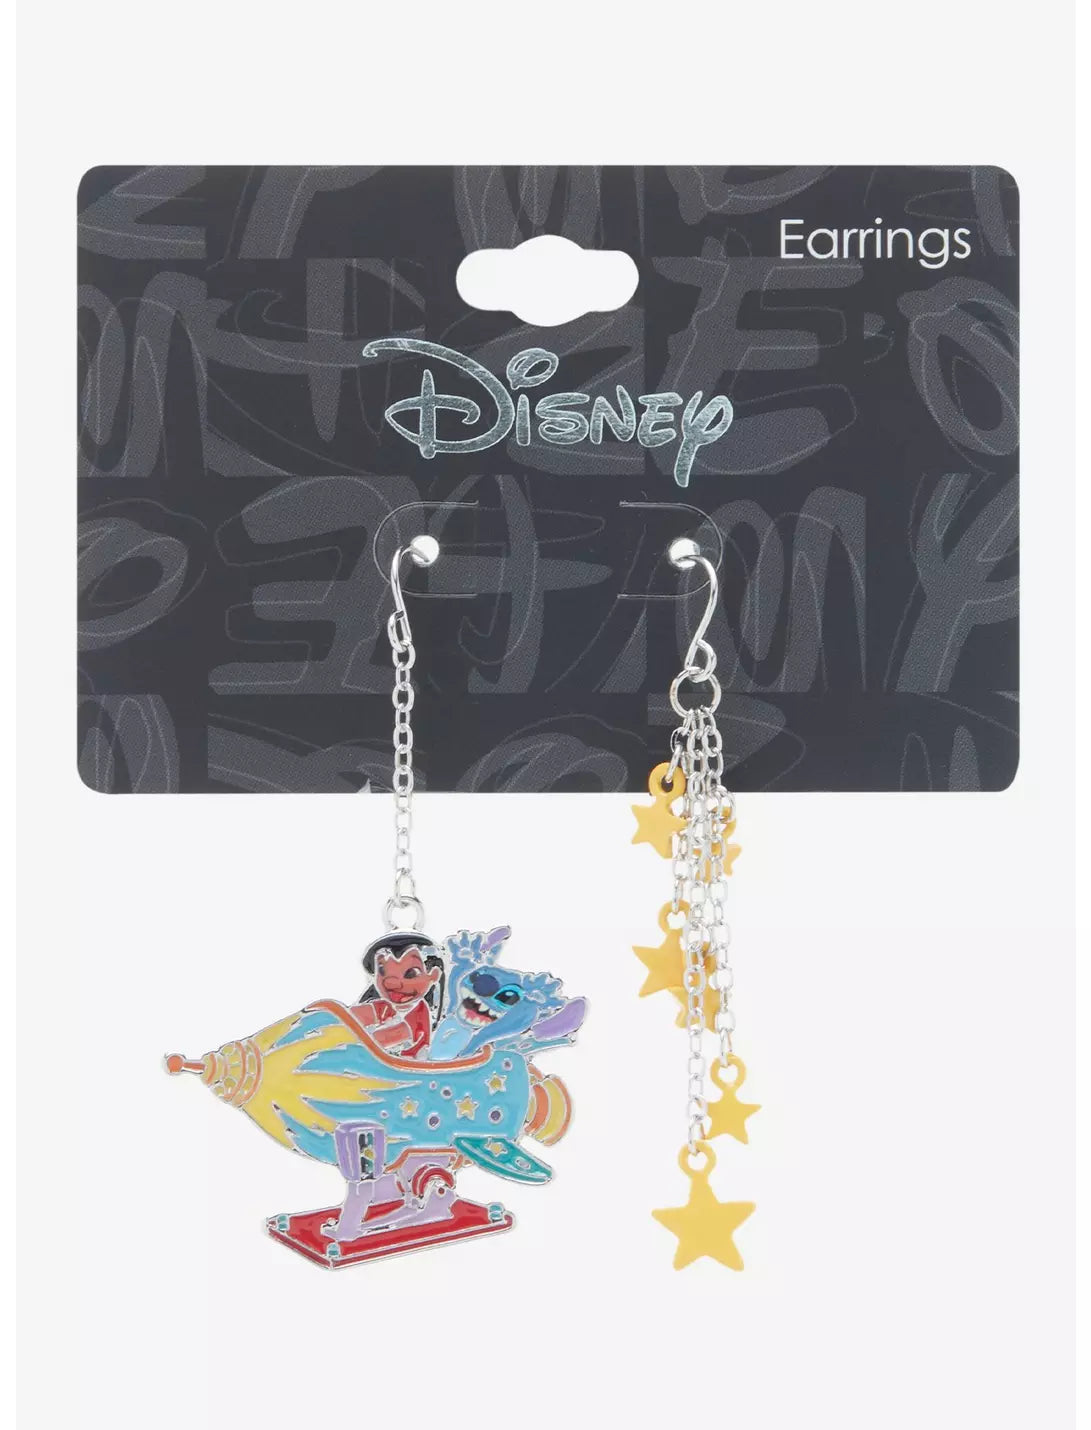 Set de aretes Disney  de Lilo & Stitch